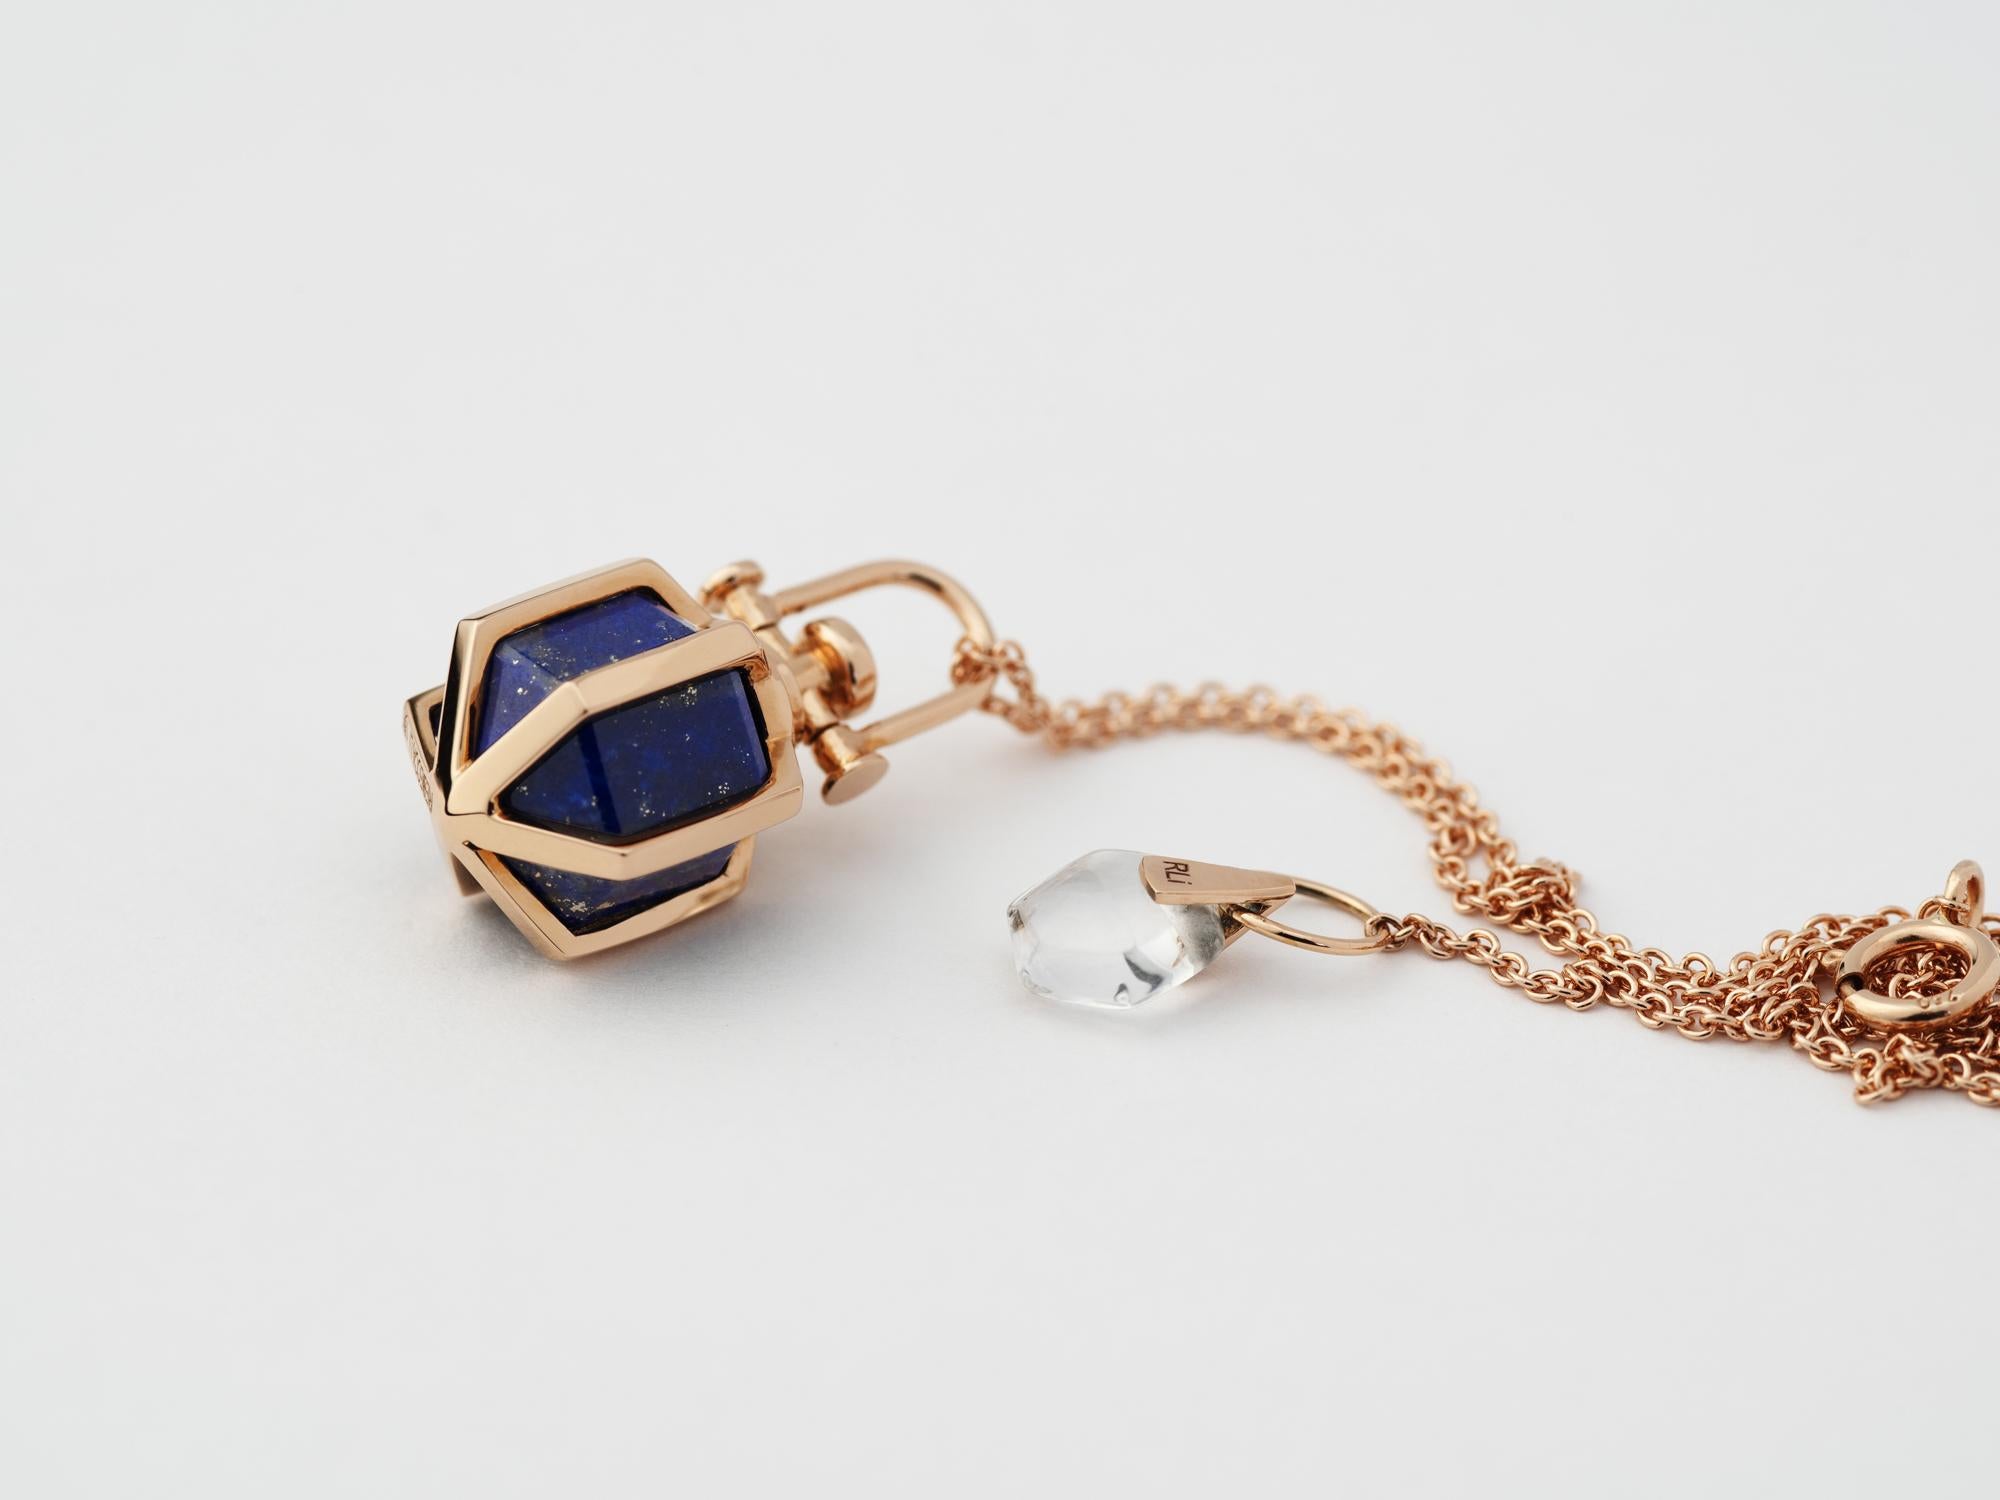 Hexagon Cut Modern Sacred Geometrical Dainty 18k Rose Gold Amulet Necklace w/ Lapis Lazuli